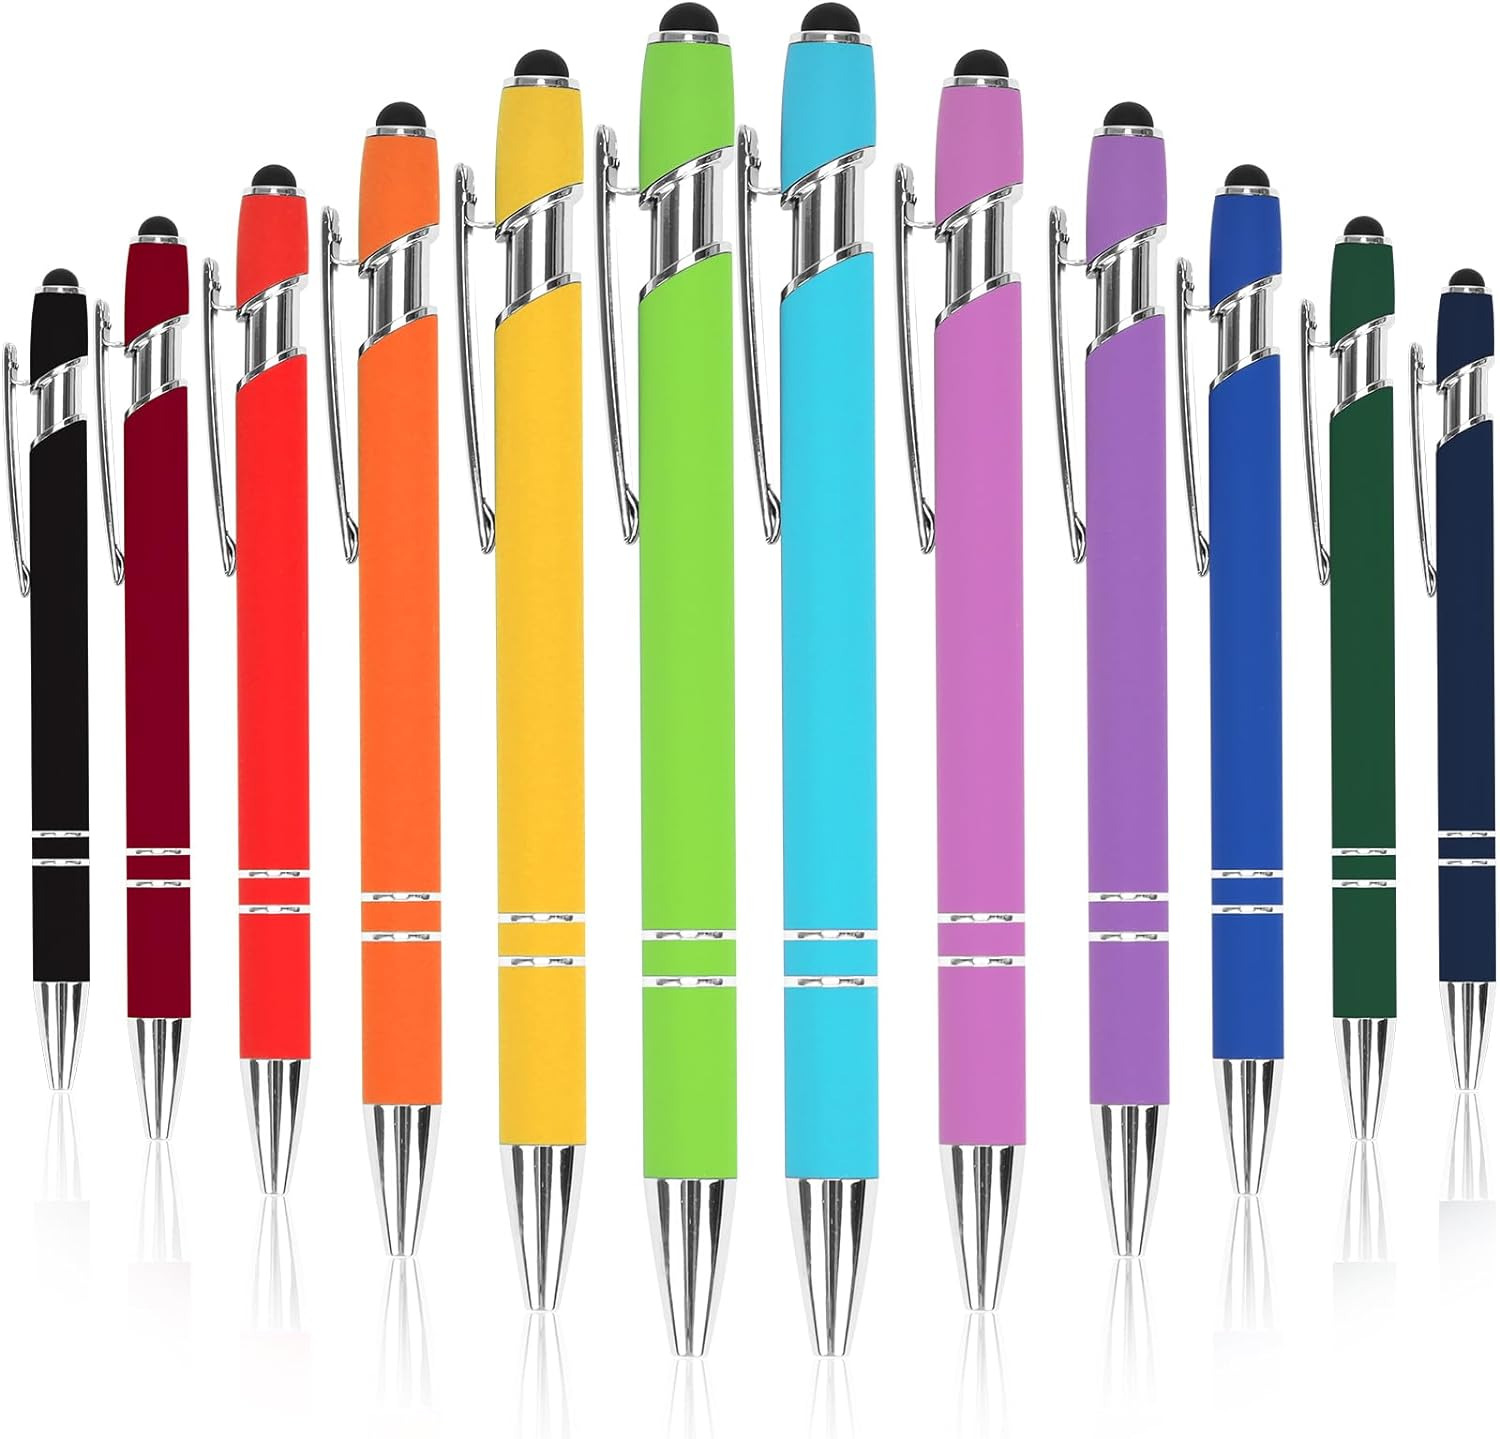 12Pcs Ballpoint Pen with Stylus Tip, Soft Touch Click Metal Pen, Stylus Pen for